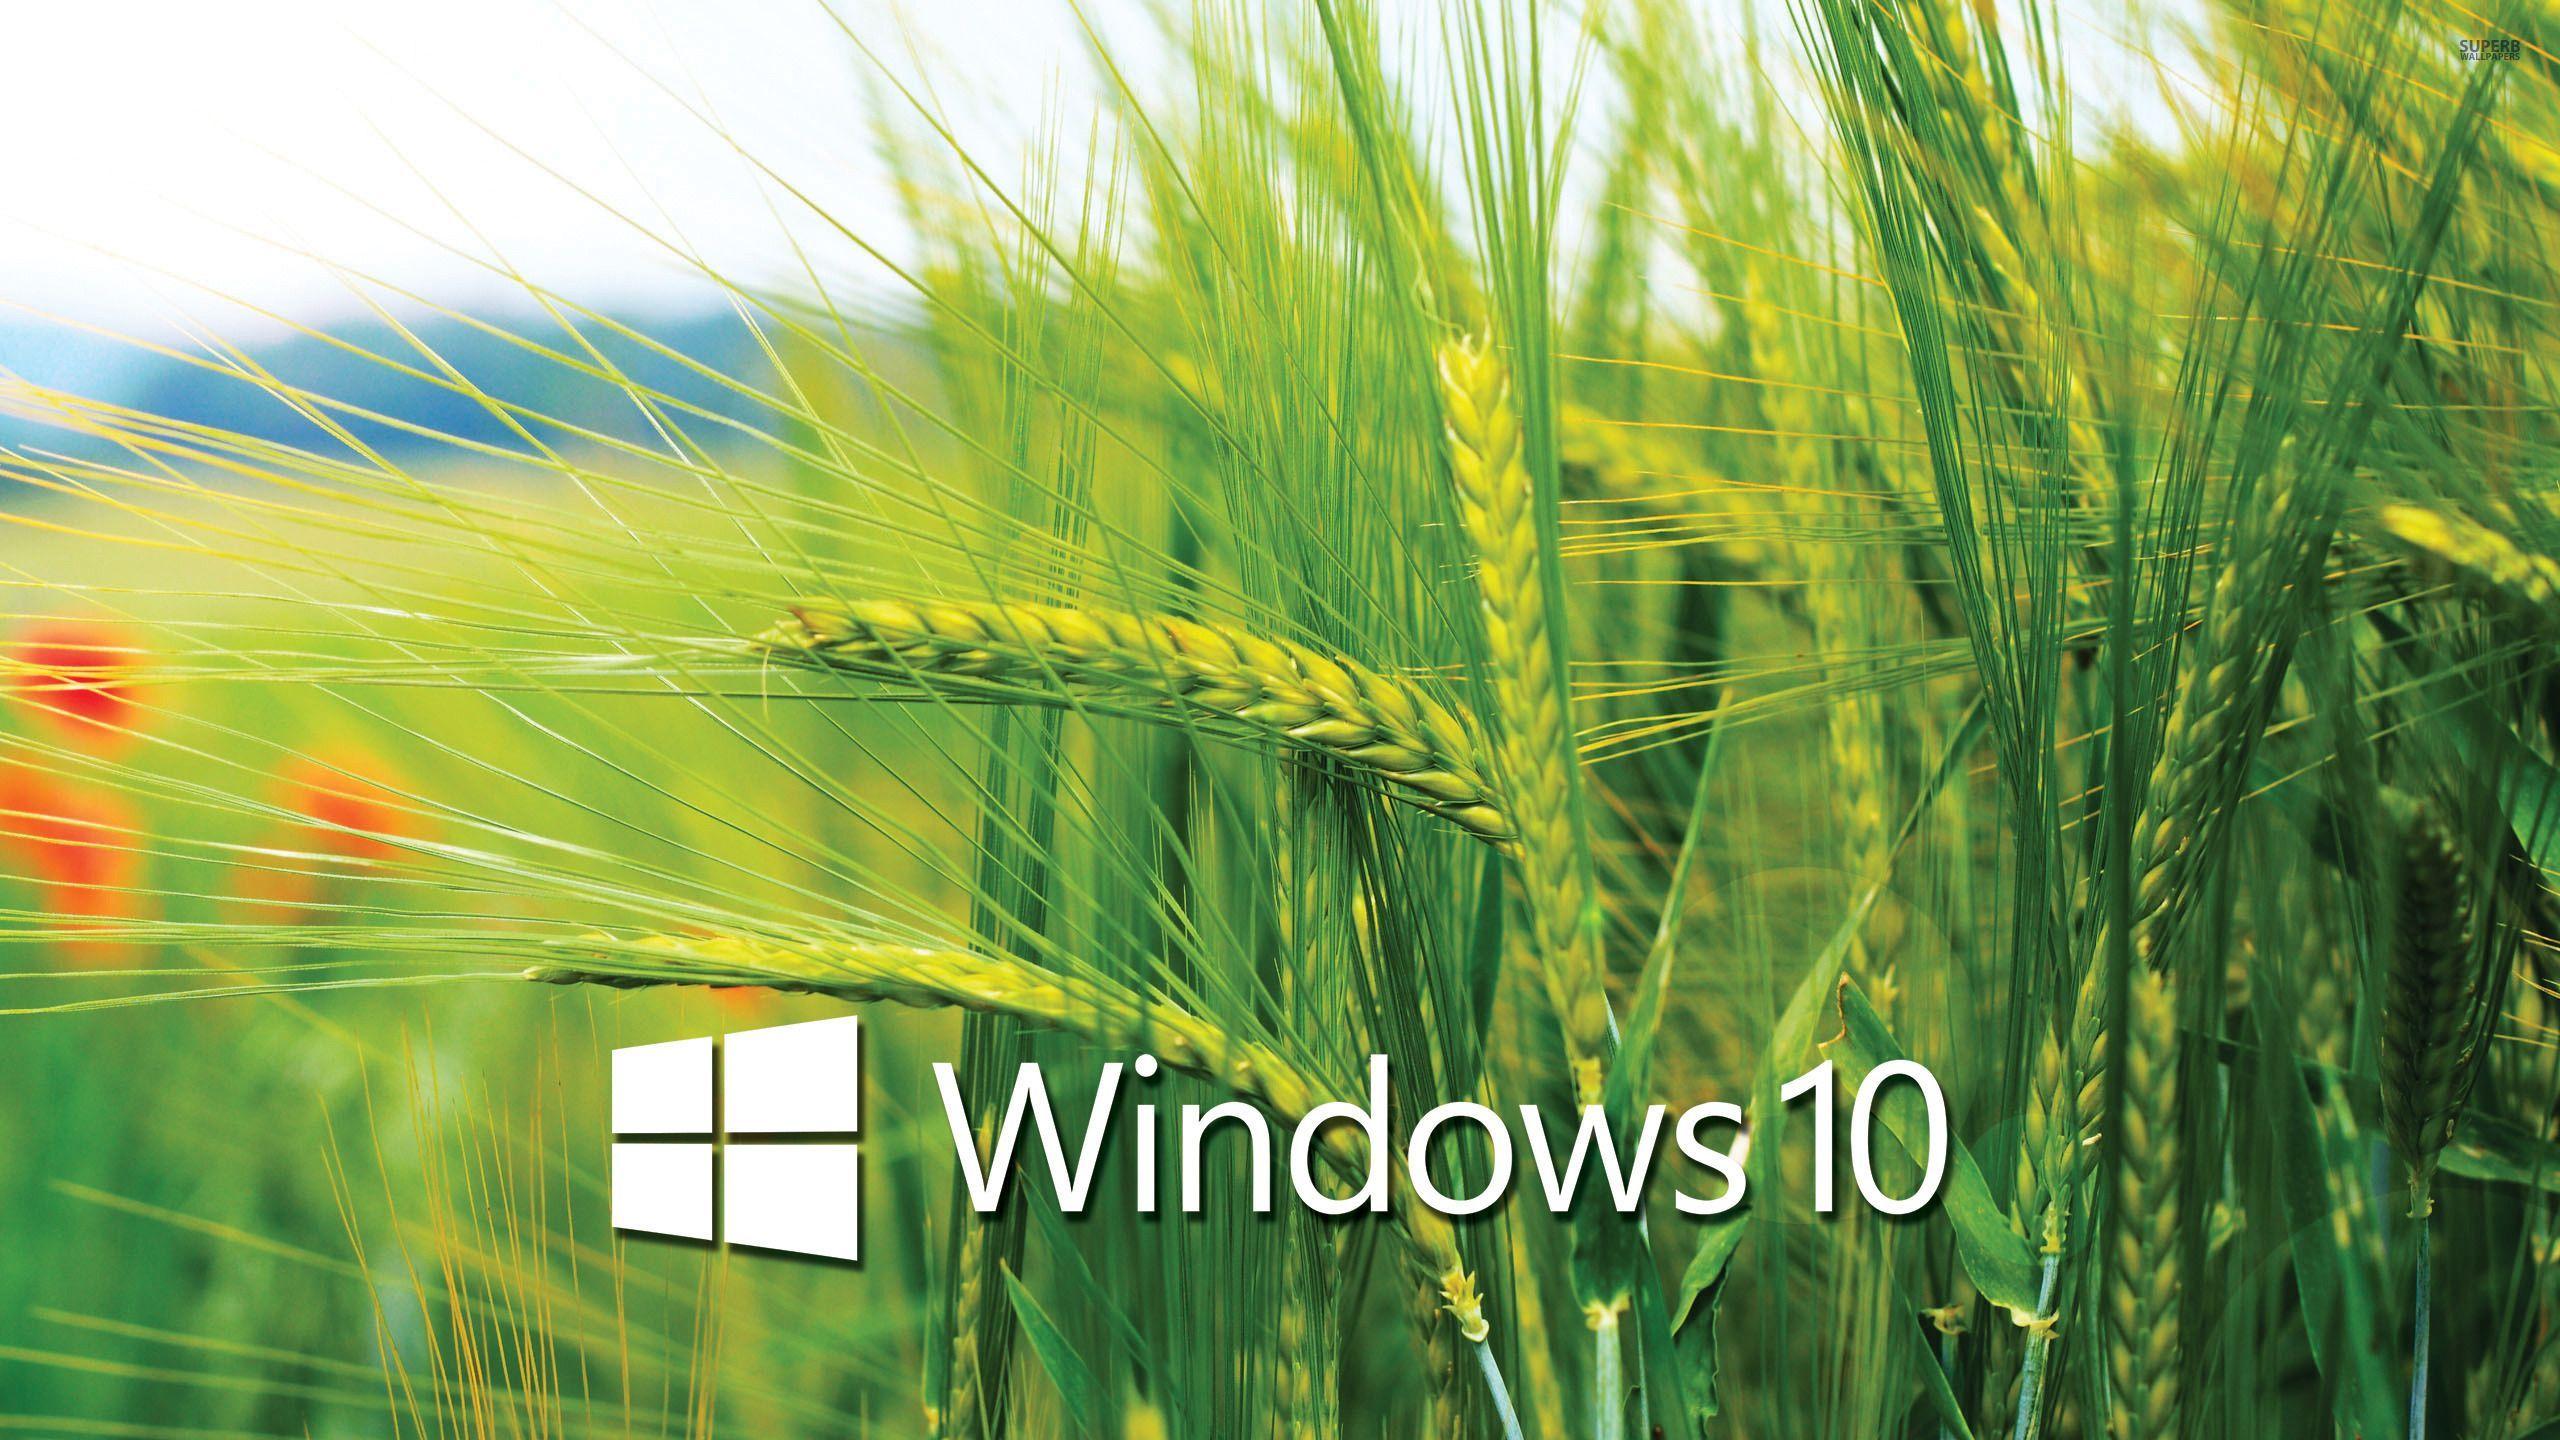 Beautiful Window 10 Latest HD image & Picture for Desktop